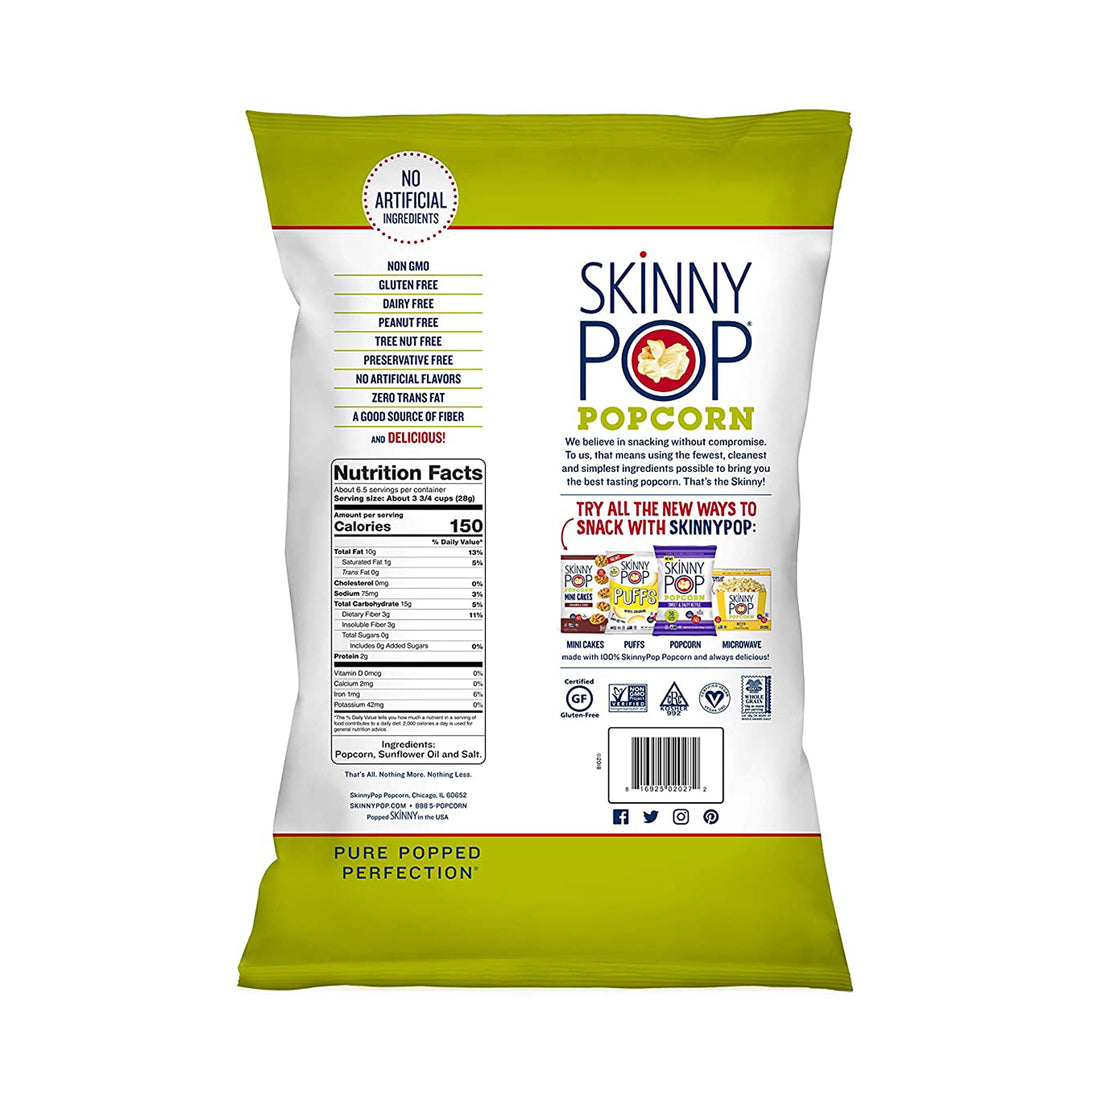 SkinnyPop Gluten-Free Original Popcorn Sharing Size 6.7 oz.